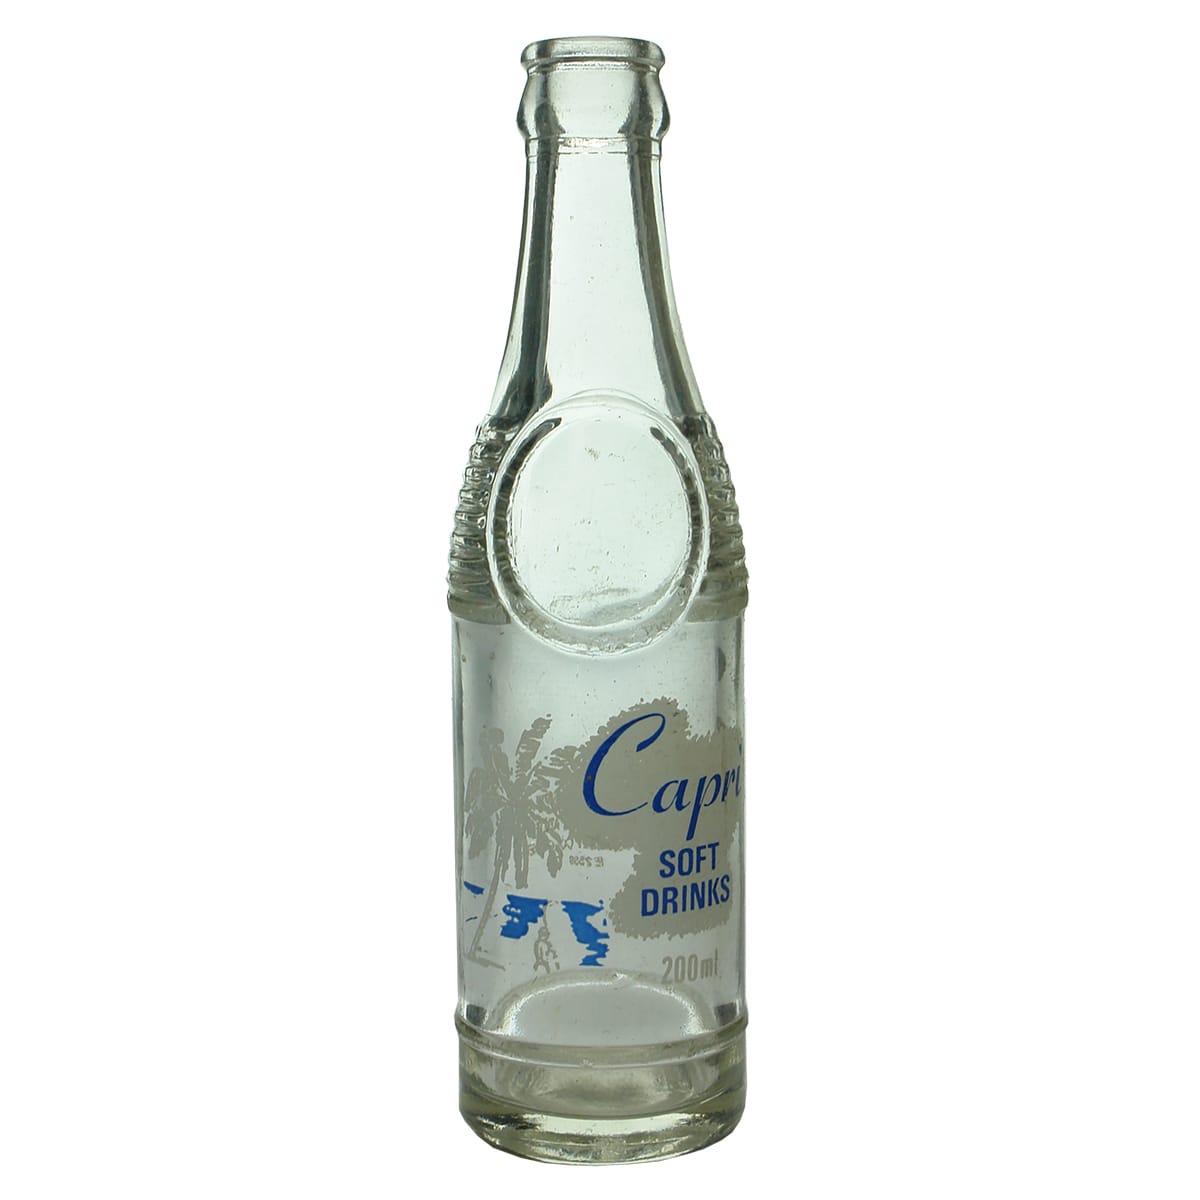 Crown Seal. Capri Soft Drinks. Ceramic Label. 200 ml.